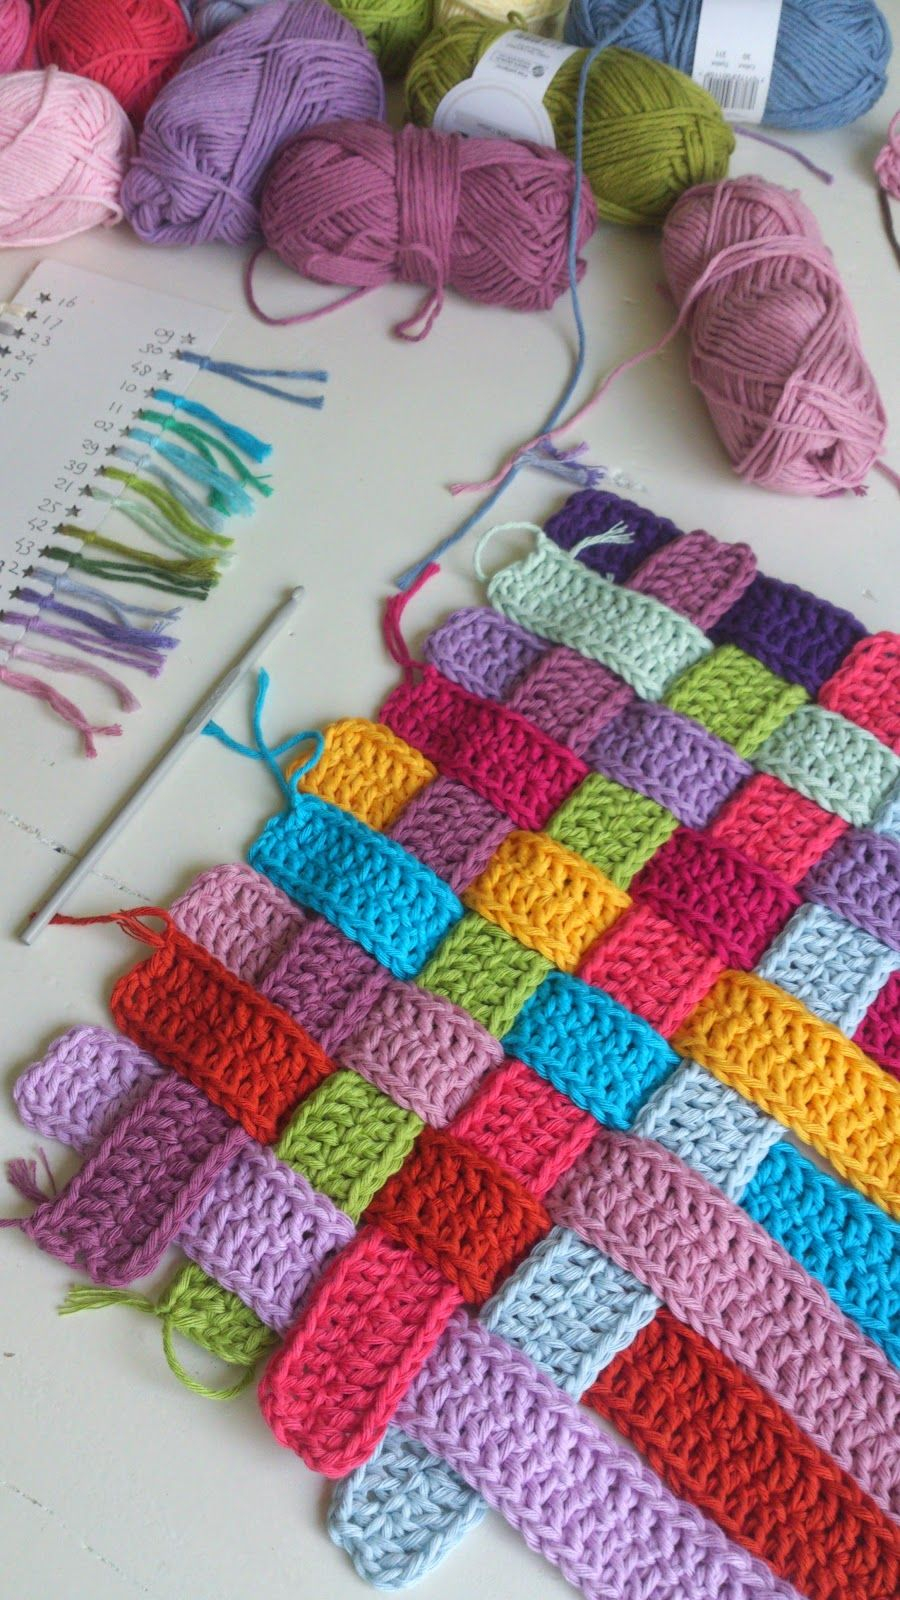 Unusual Crochet Patterns Basket Weave Crochet Strips Bench Cover Photo Tutorial Crazy